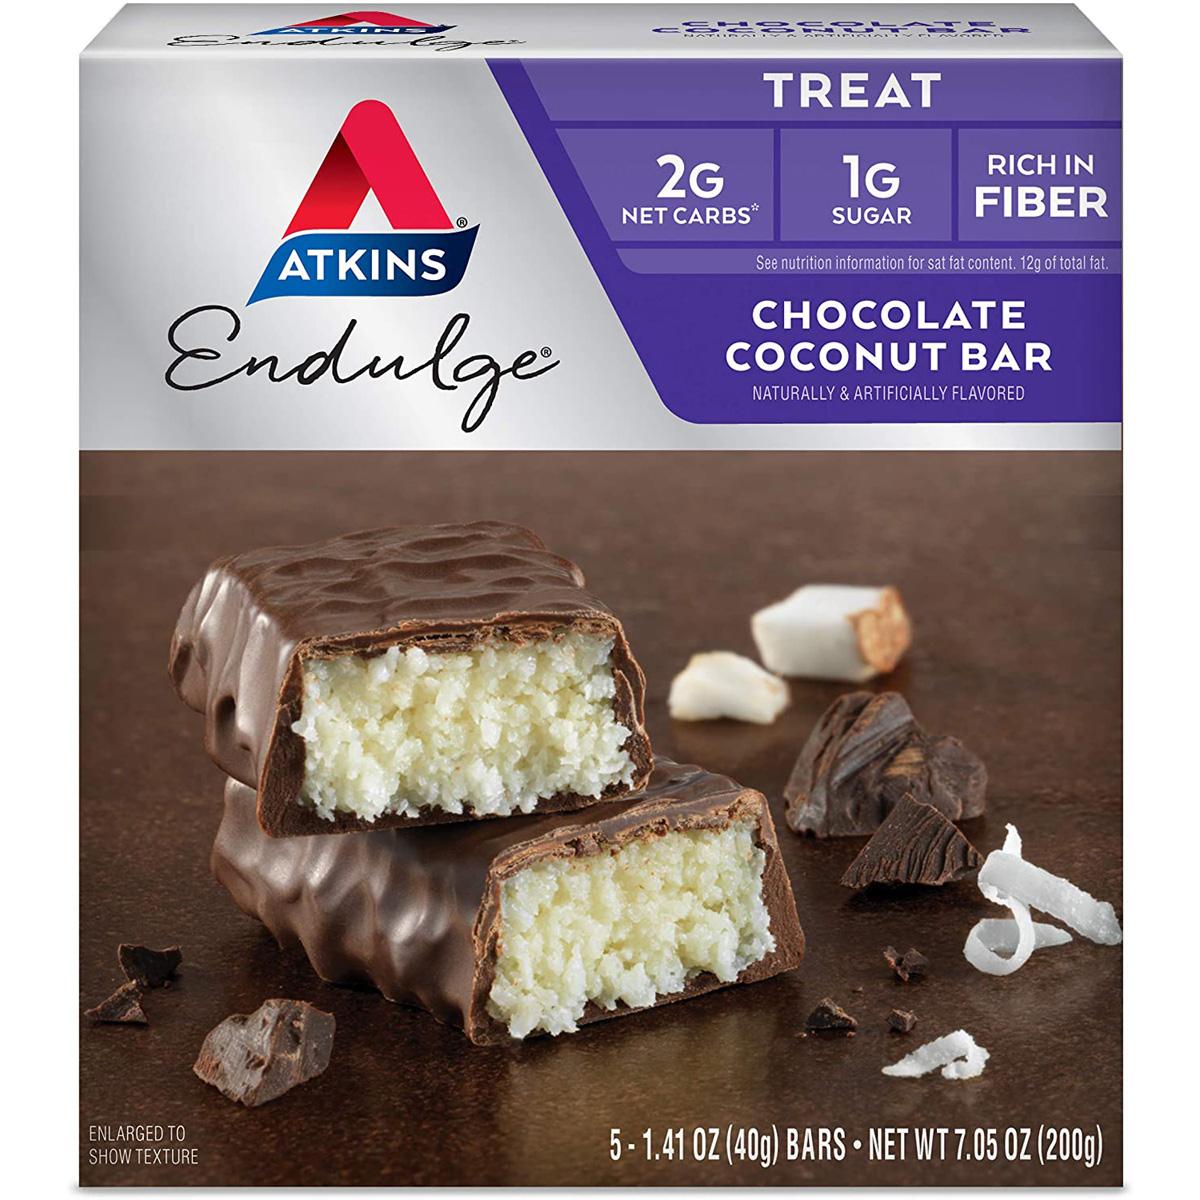 5 Atkins Endulge Chocholate Coconut Treat Dessert Bar for $4.34 Shipped